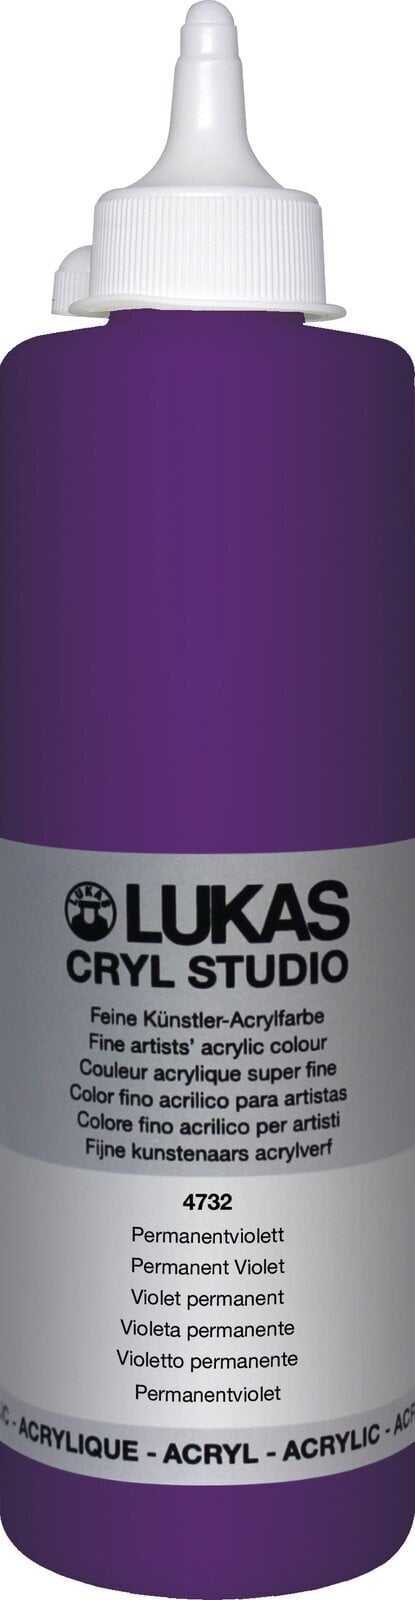 Acrylic Paint Lukas Cryl Studio Acrylic Paint 500 ml Permanent Violet